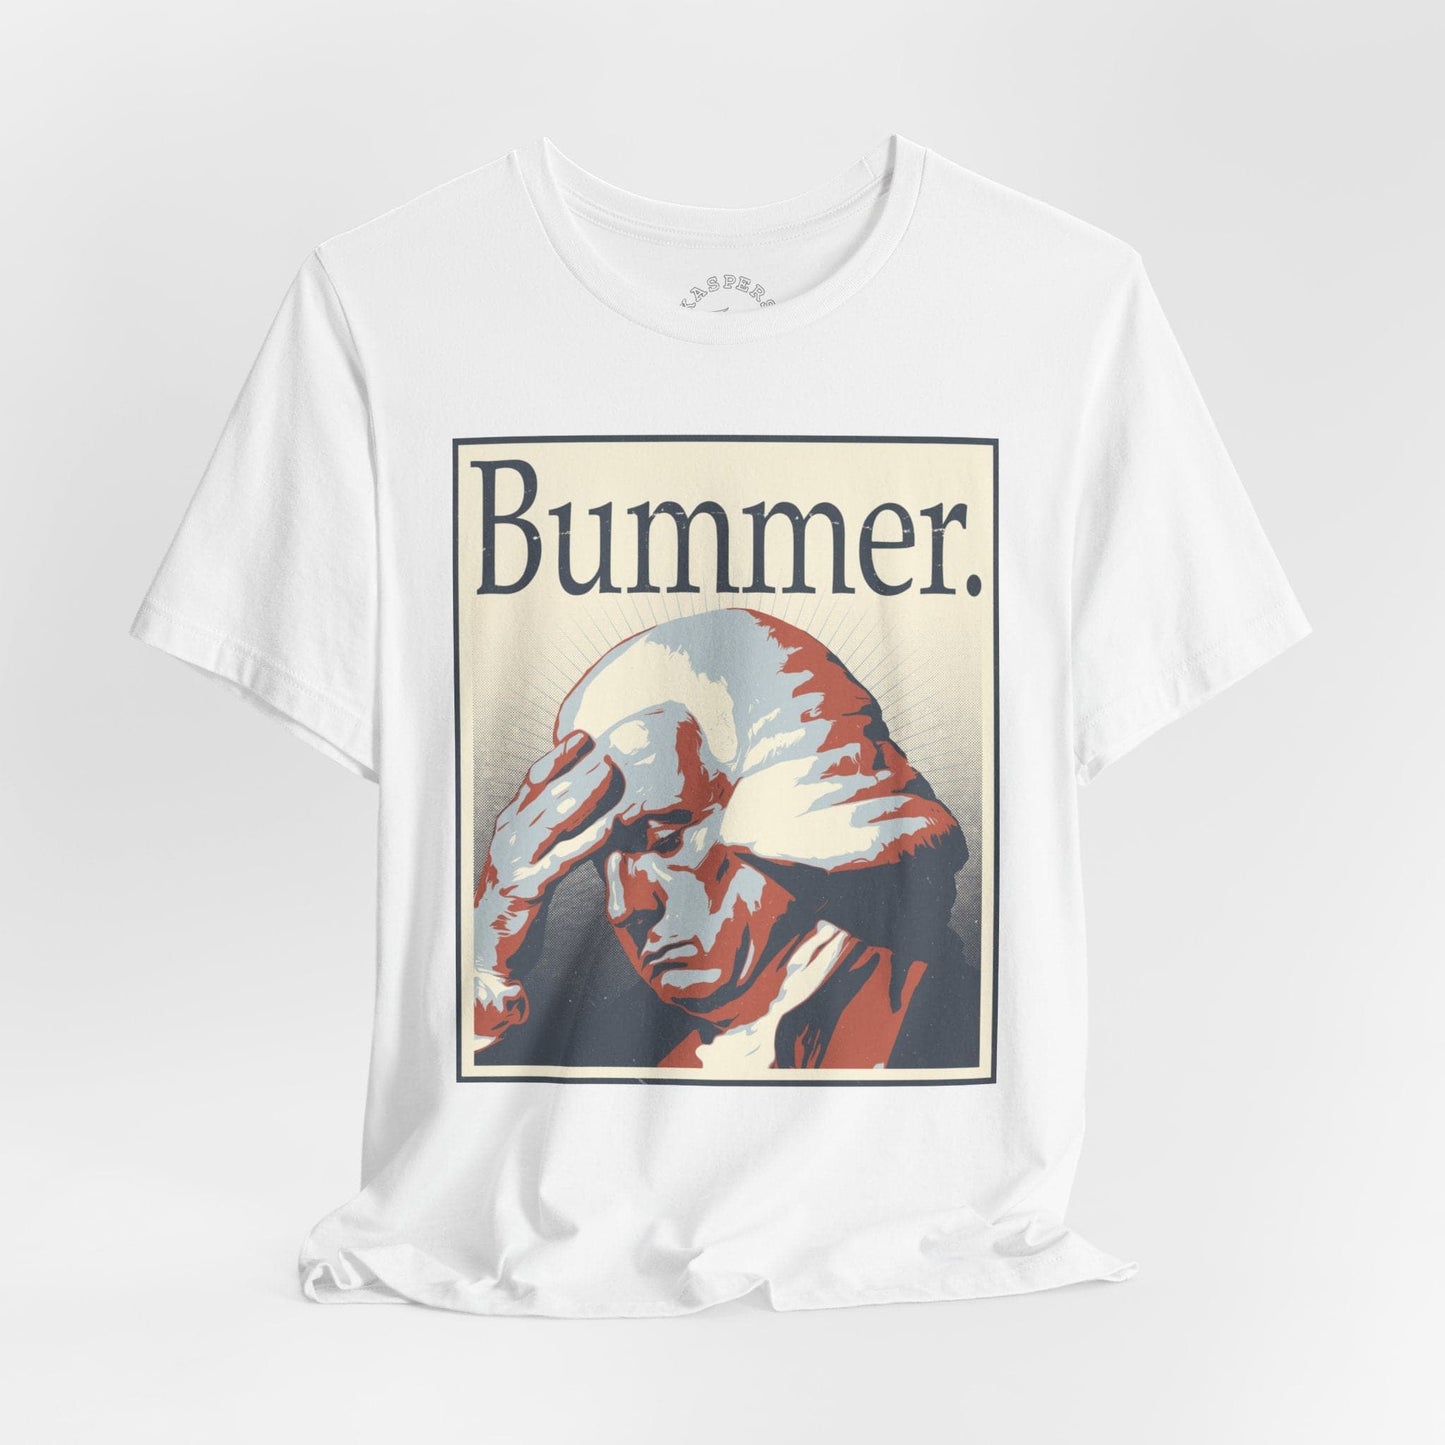 Bummer. - George Washington T-Shirt